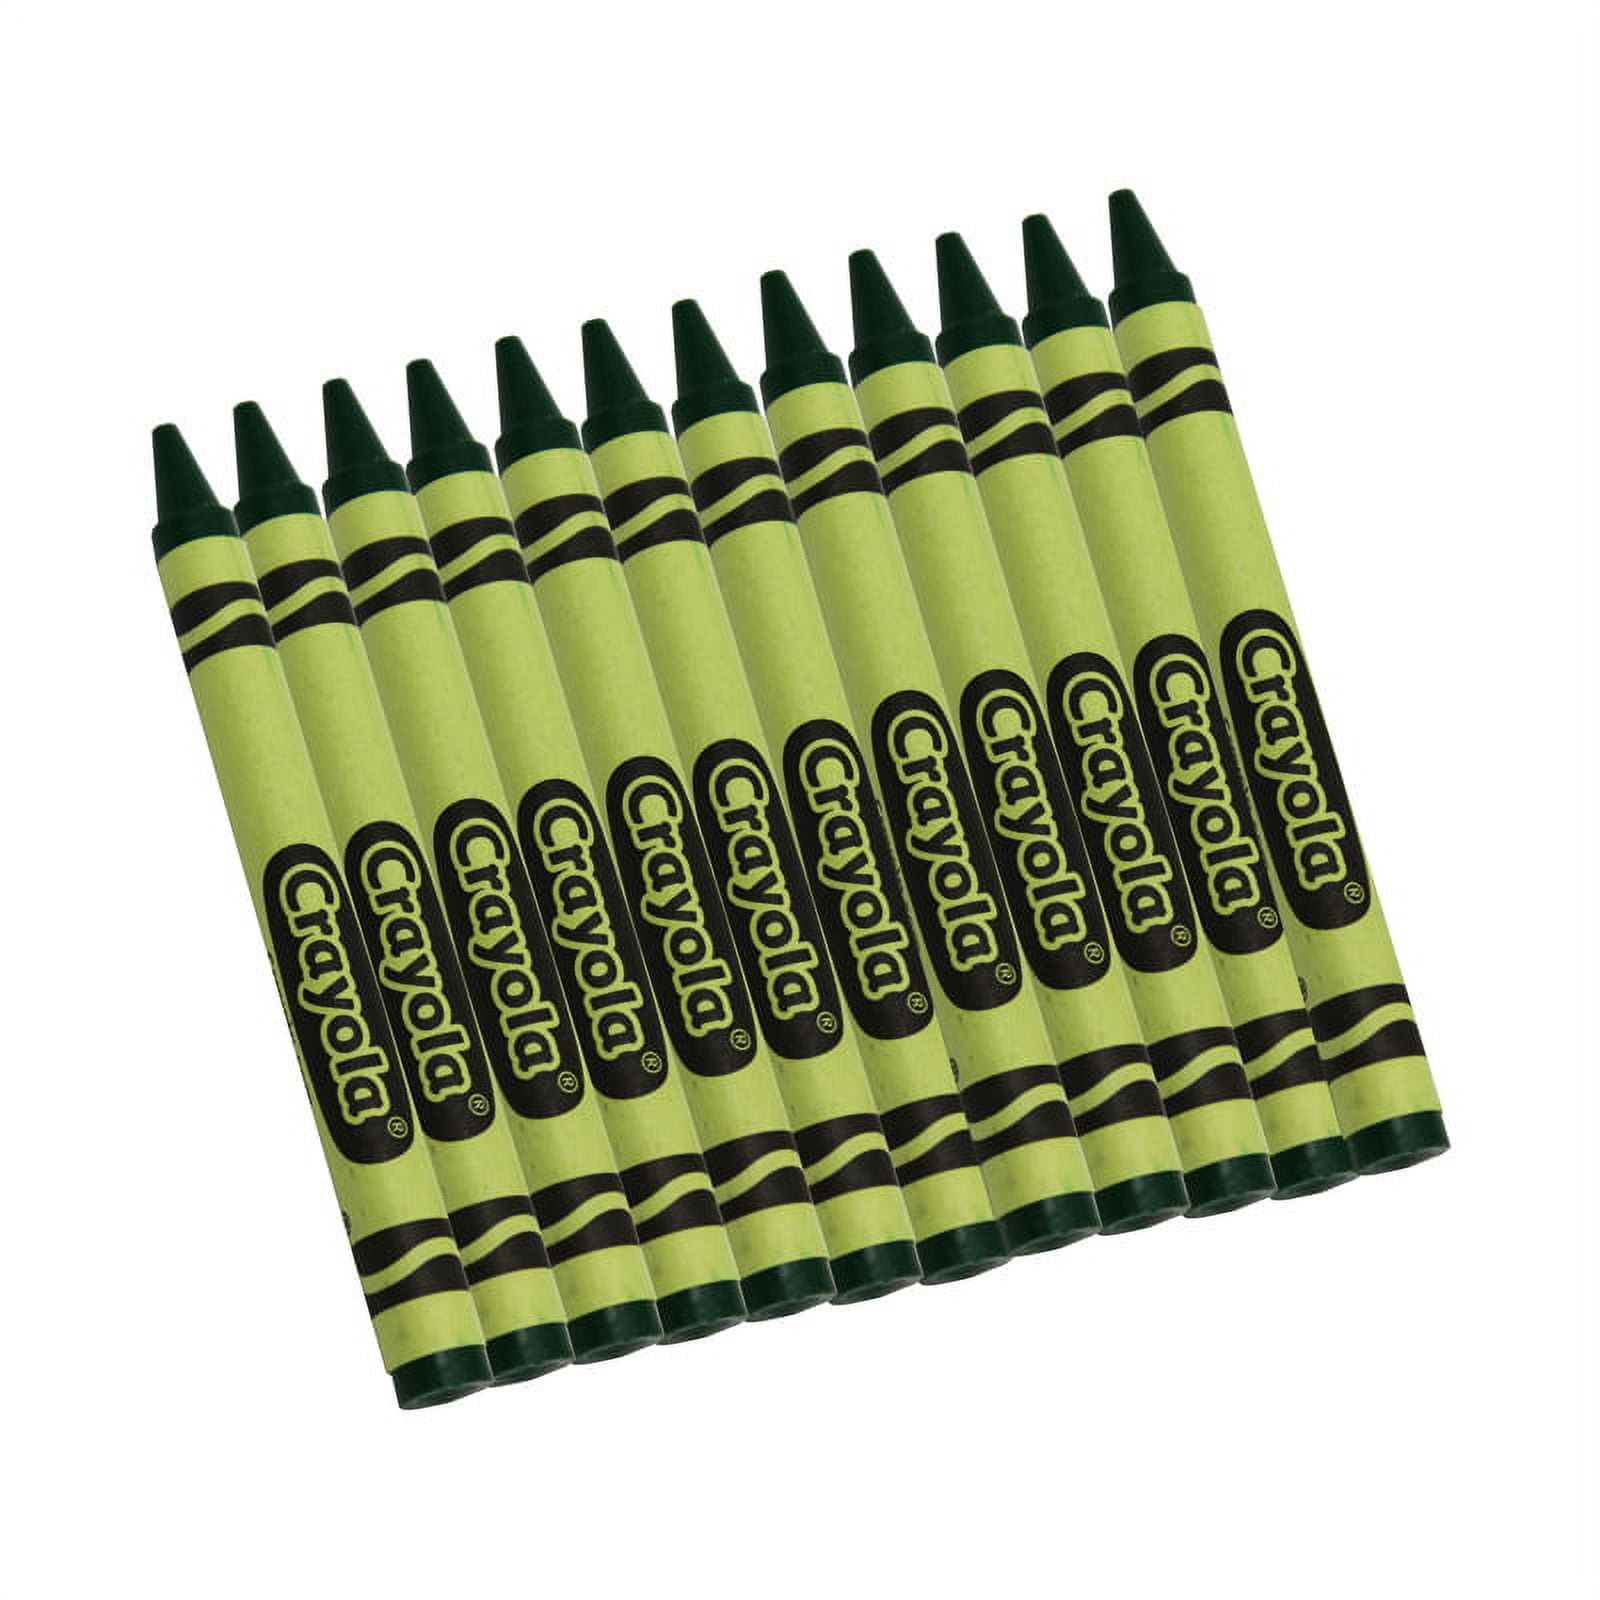 Flexcils SL001001 Newfangled Twistable Crayons, Multi Color